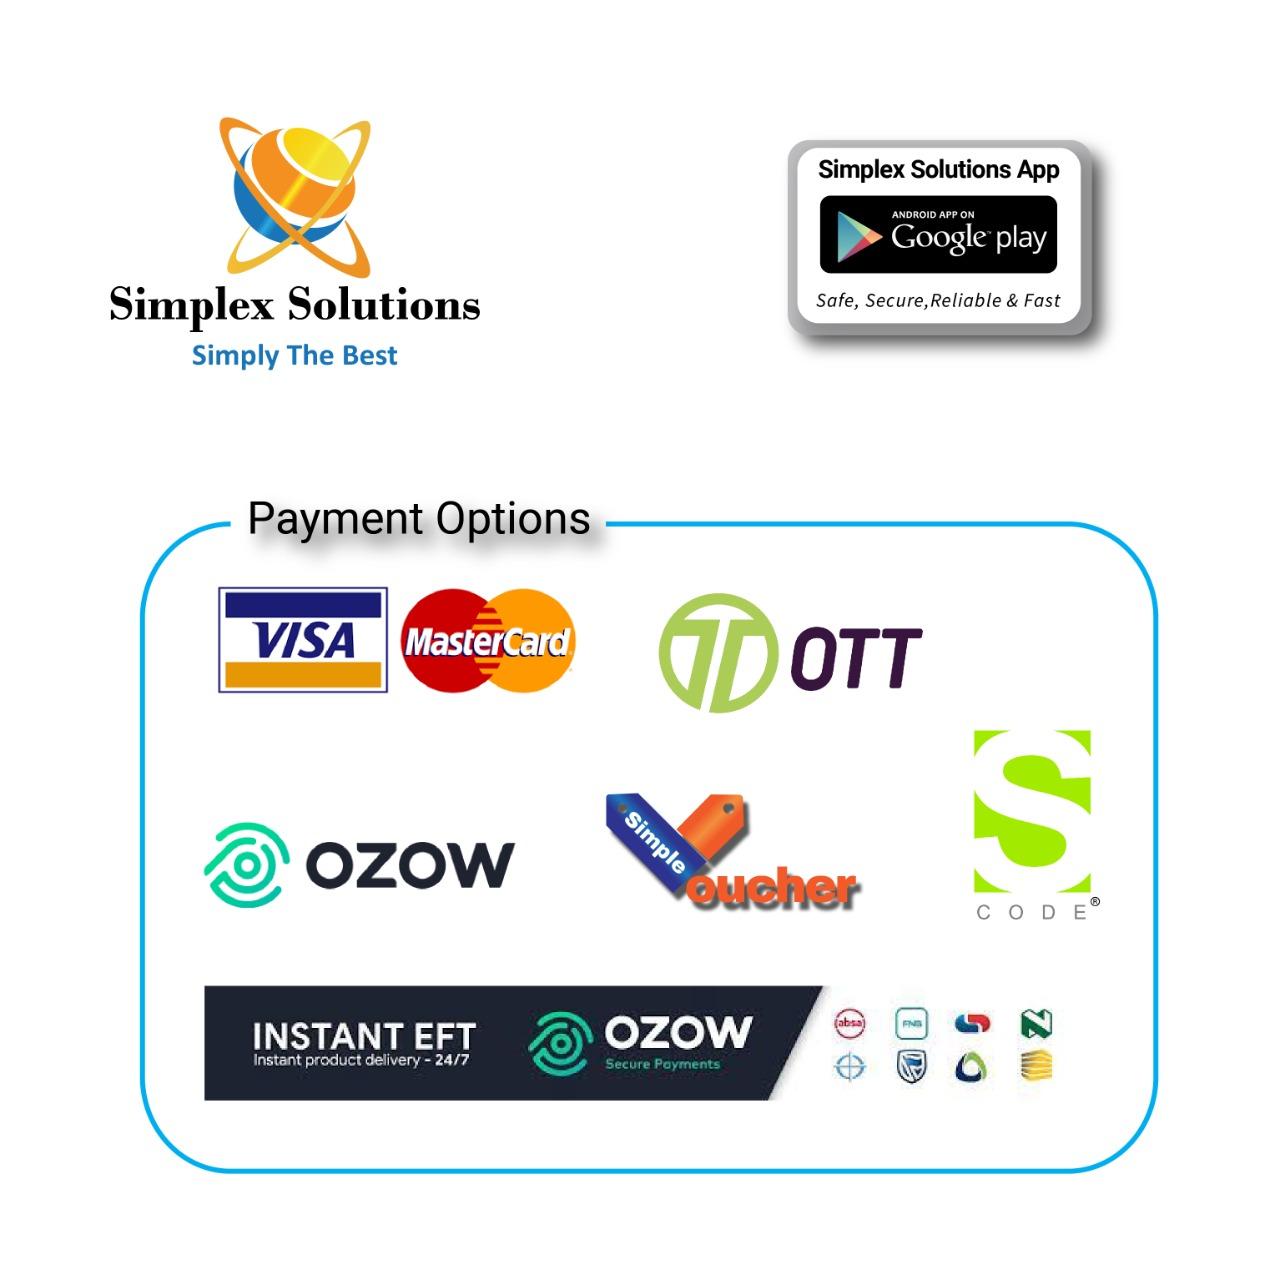 Topup / Fund / Deposit Simplex Wallet to start Transacting - Cover Image